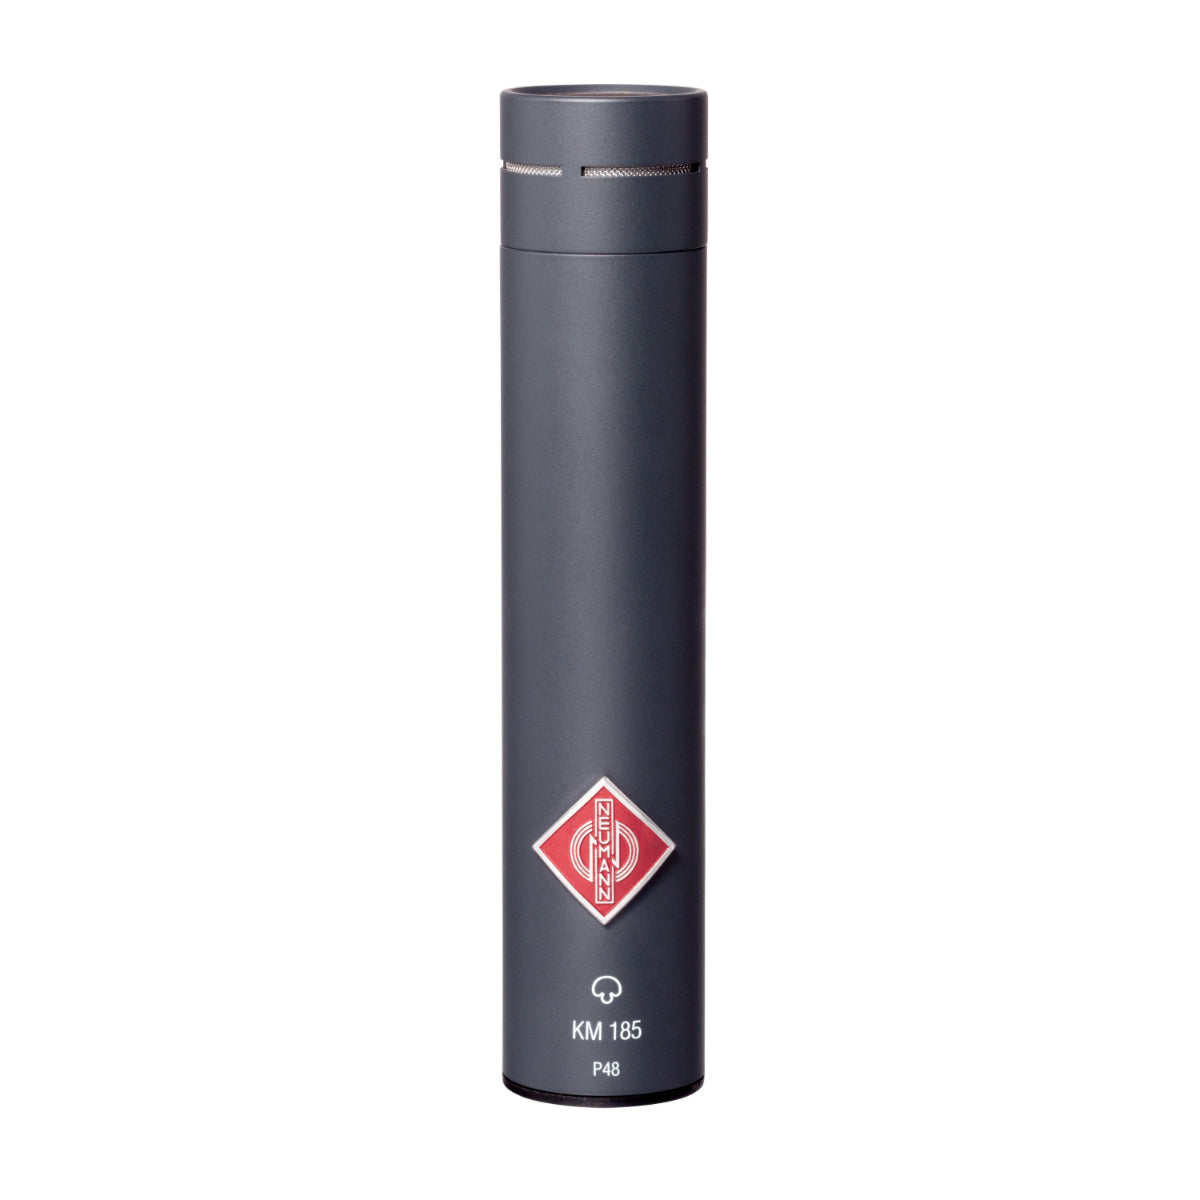 Neumann KM 185-MT Miniature Microphone System, Hypercardioid, Black, WNS 100 Windscreen, SG 21